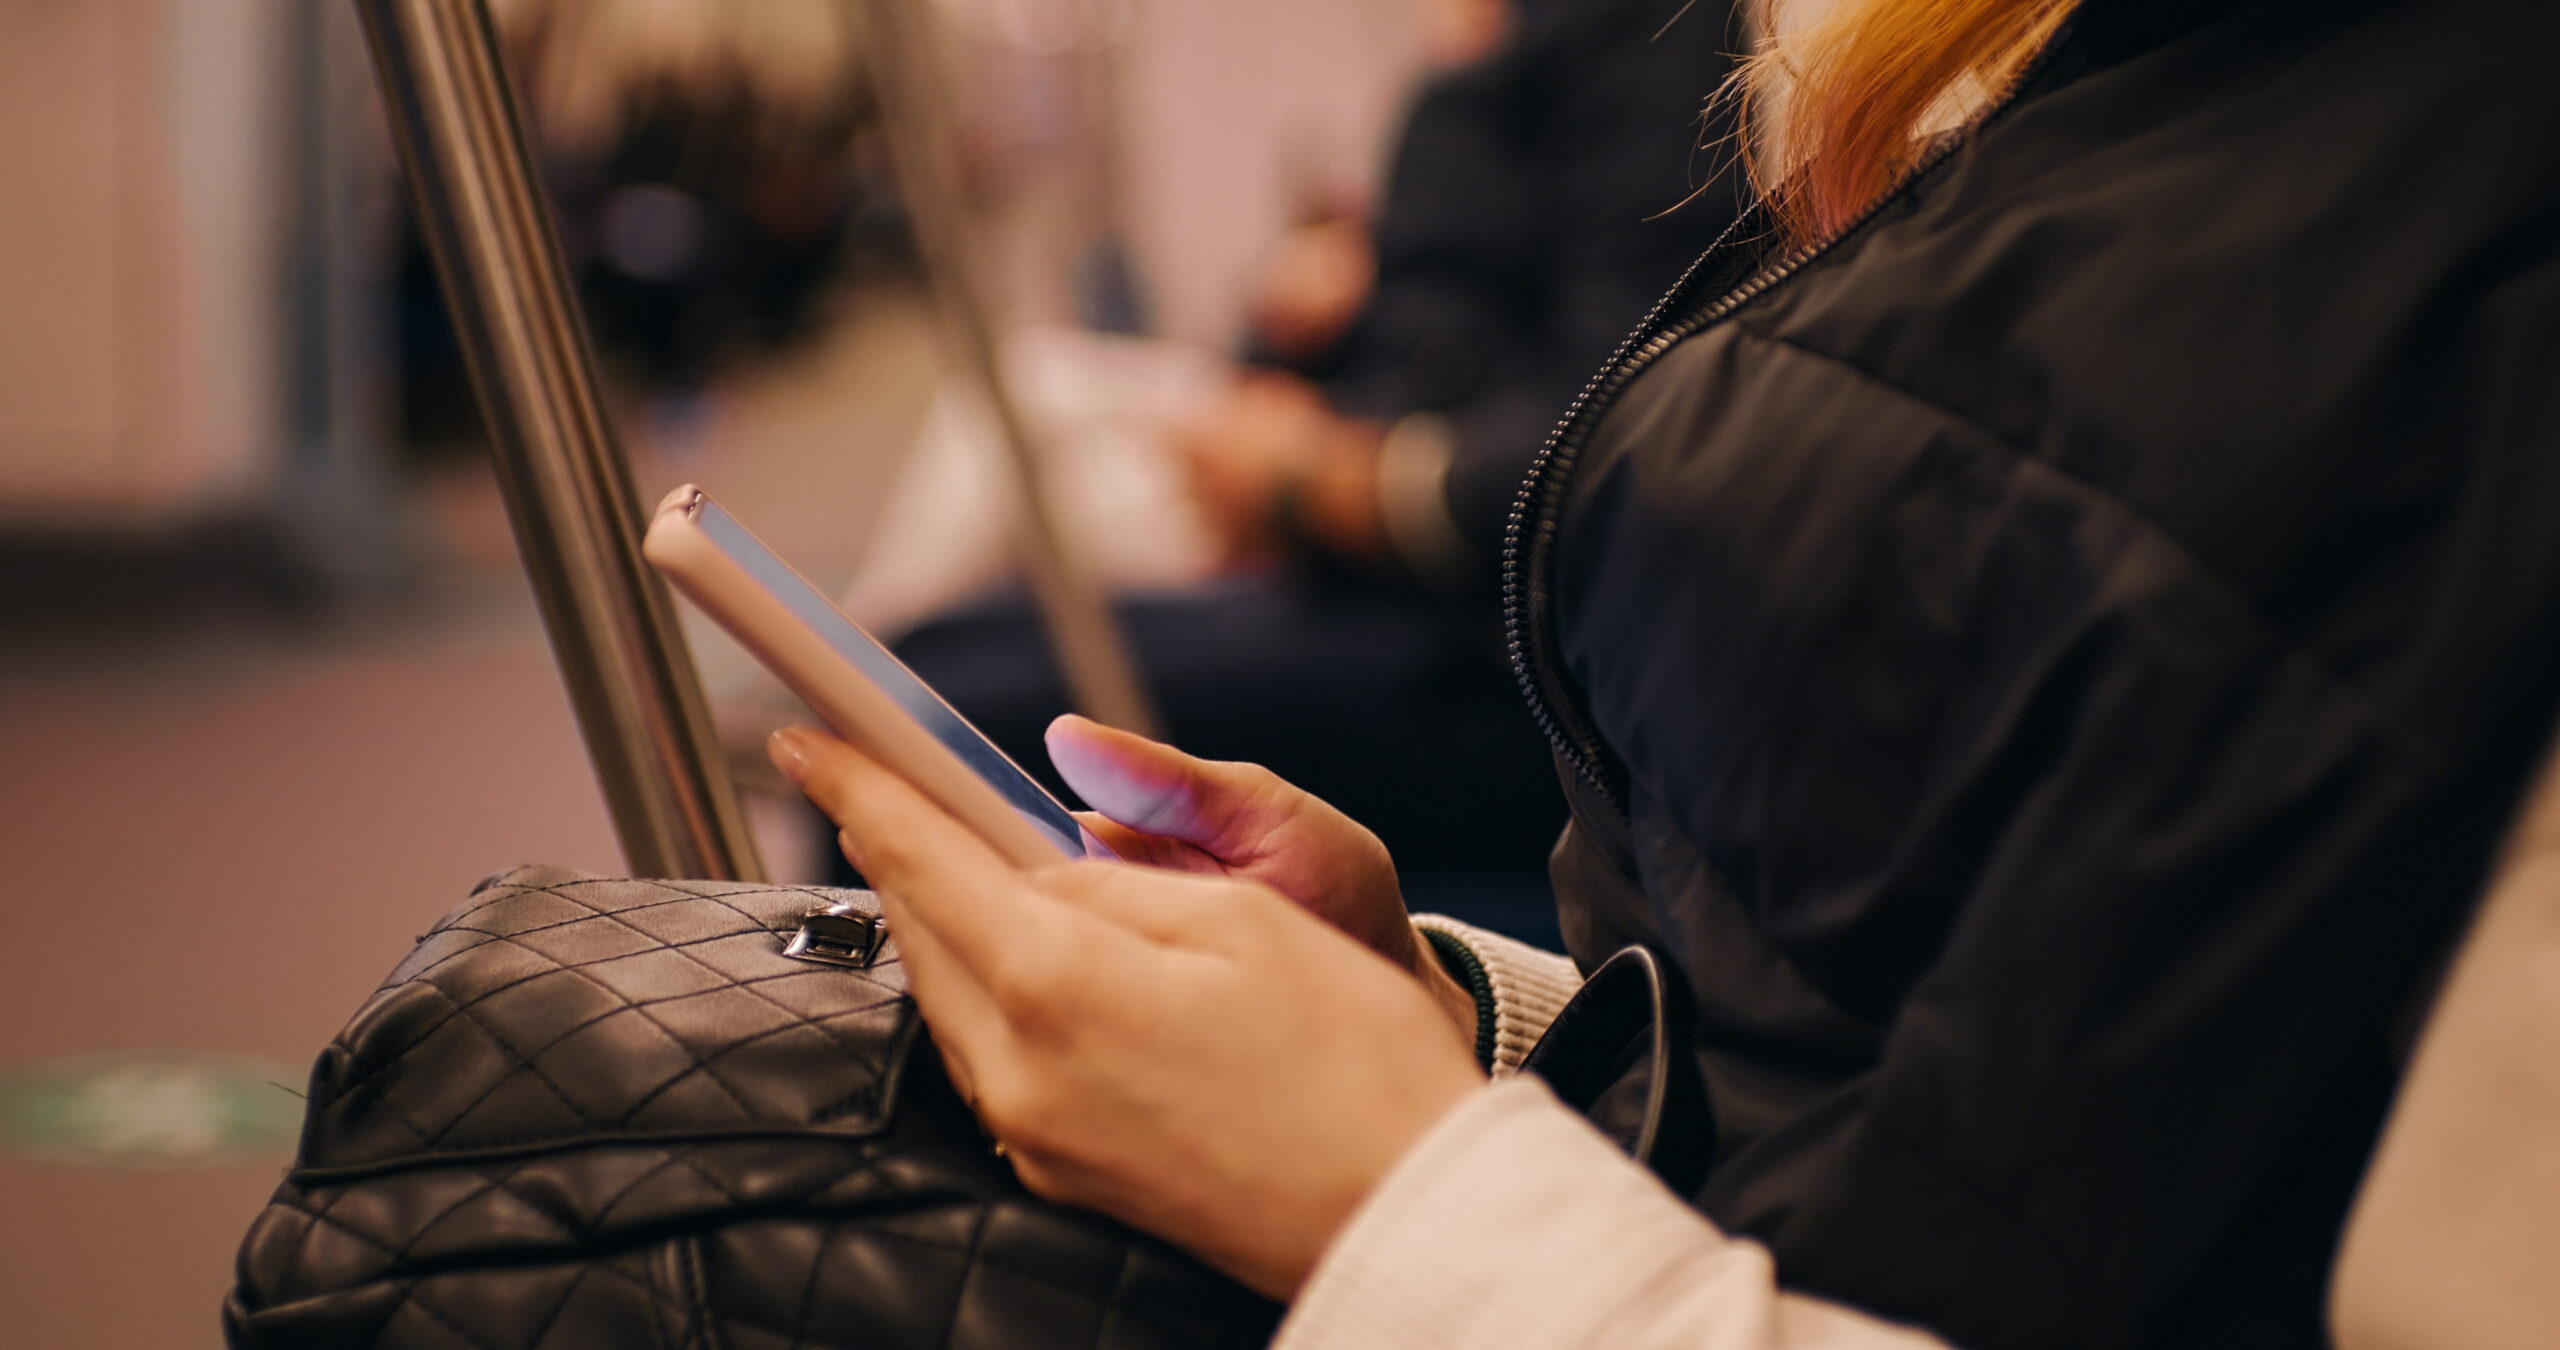 female using smartphone in subway